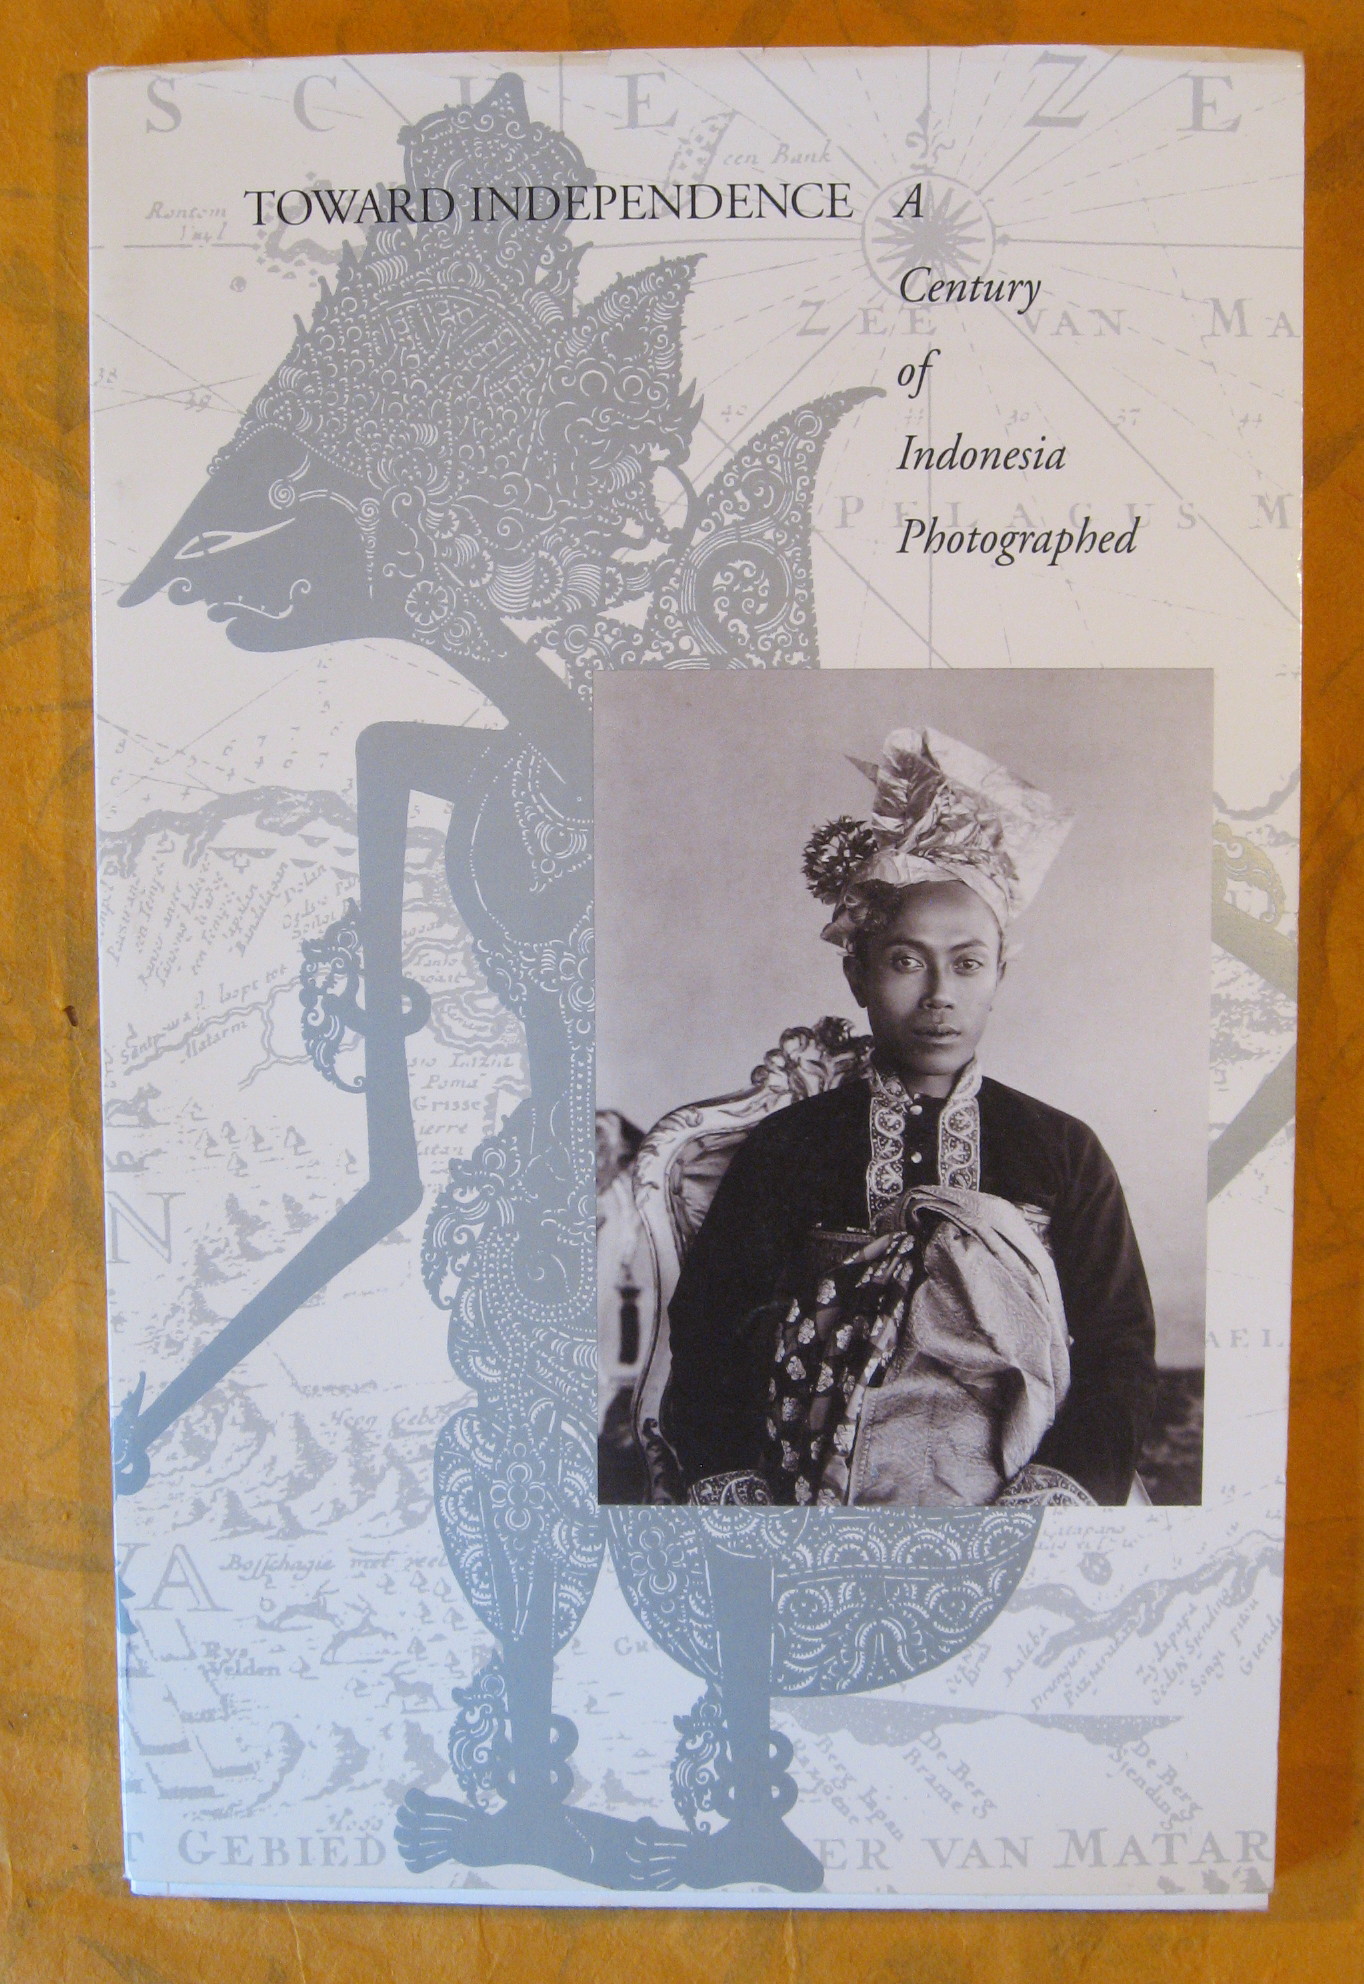 Toward Independence: A Century of Indonesia Photographed - Crystal, Eric, Moeshart, H.J. John Bloom, Pauline Lunsingh Scheurleer, Jan Fontein, Perter Kors, Hedi Hinzler et al.